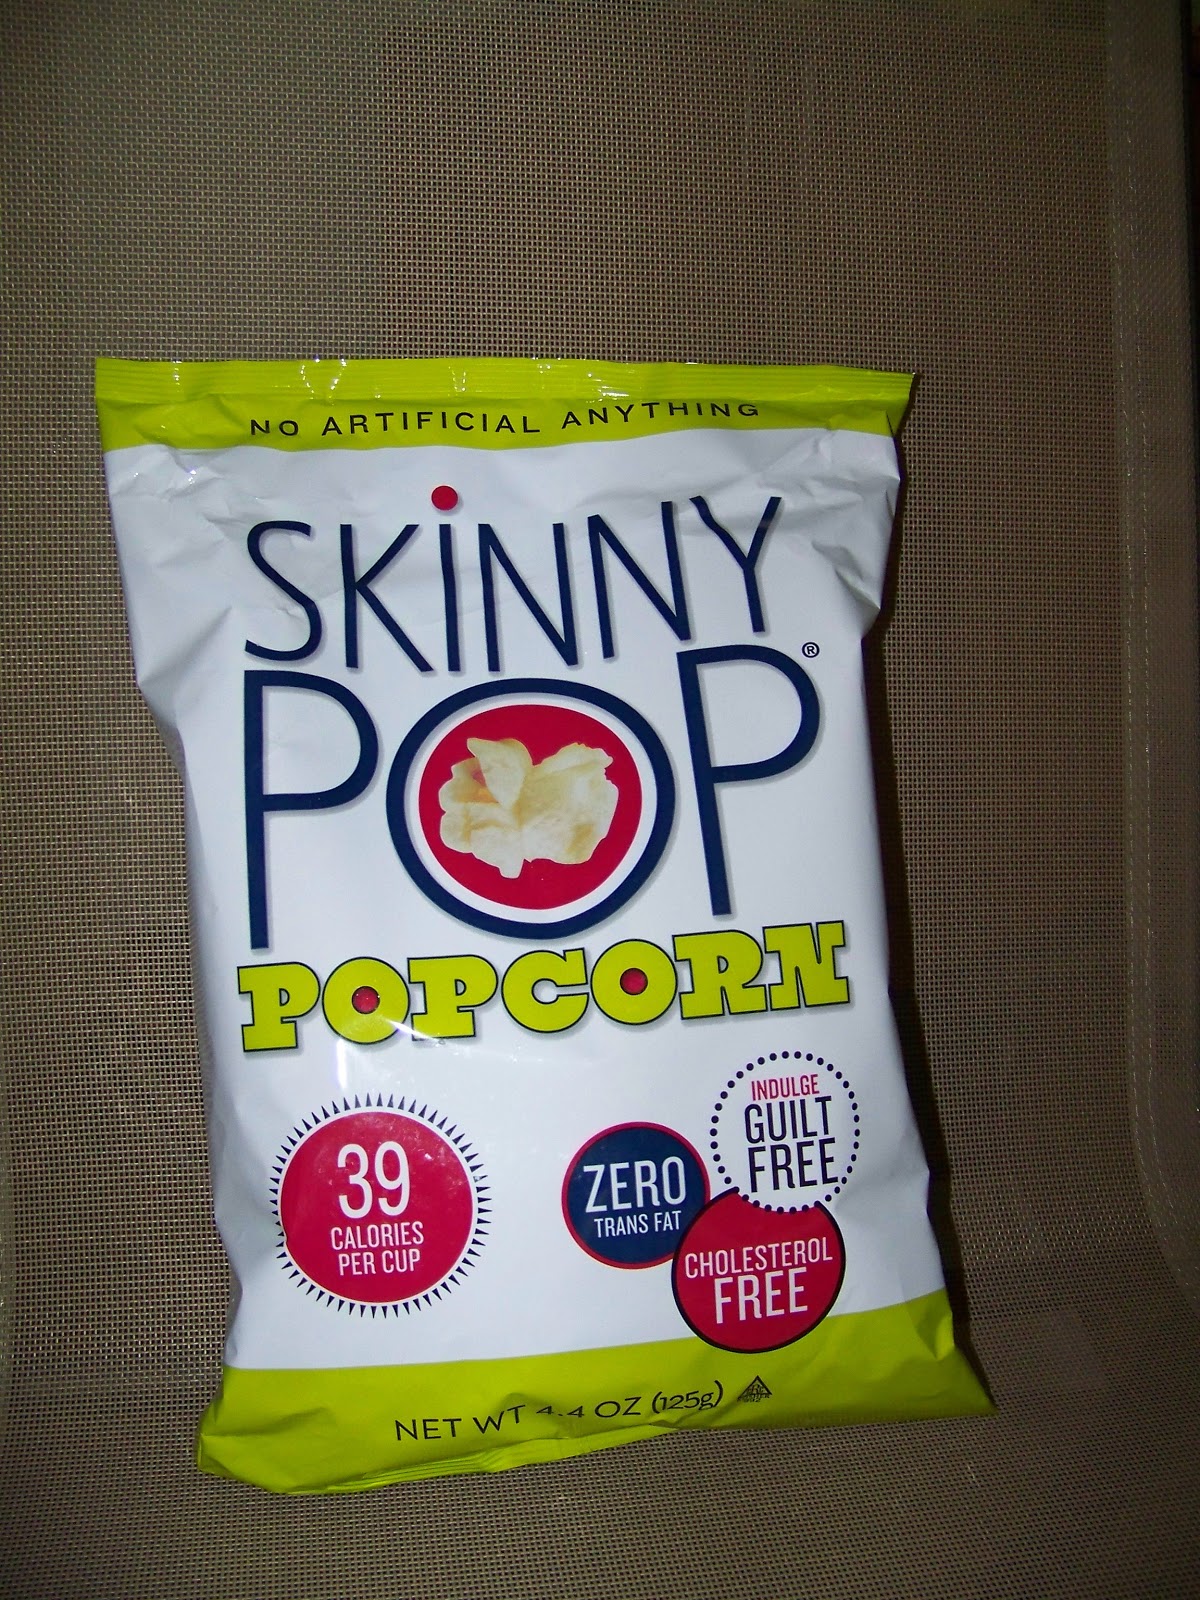 Food, Fotos, and Fun! Skinny Pop Popcorn Review